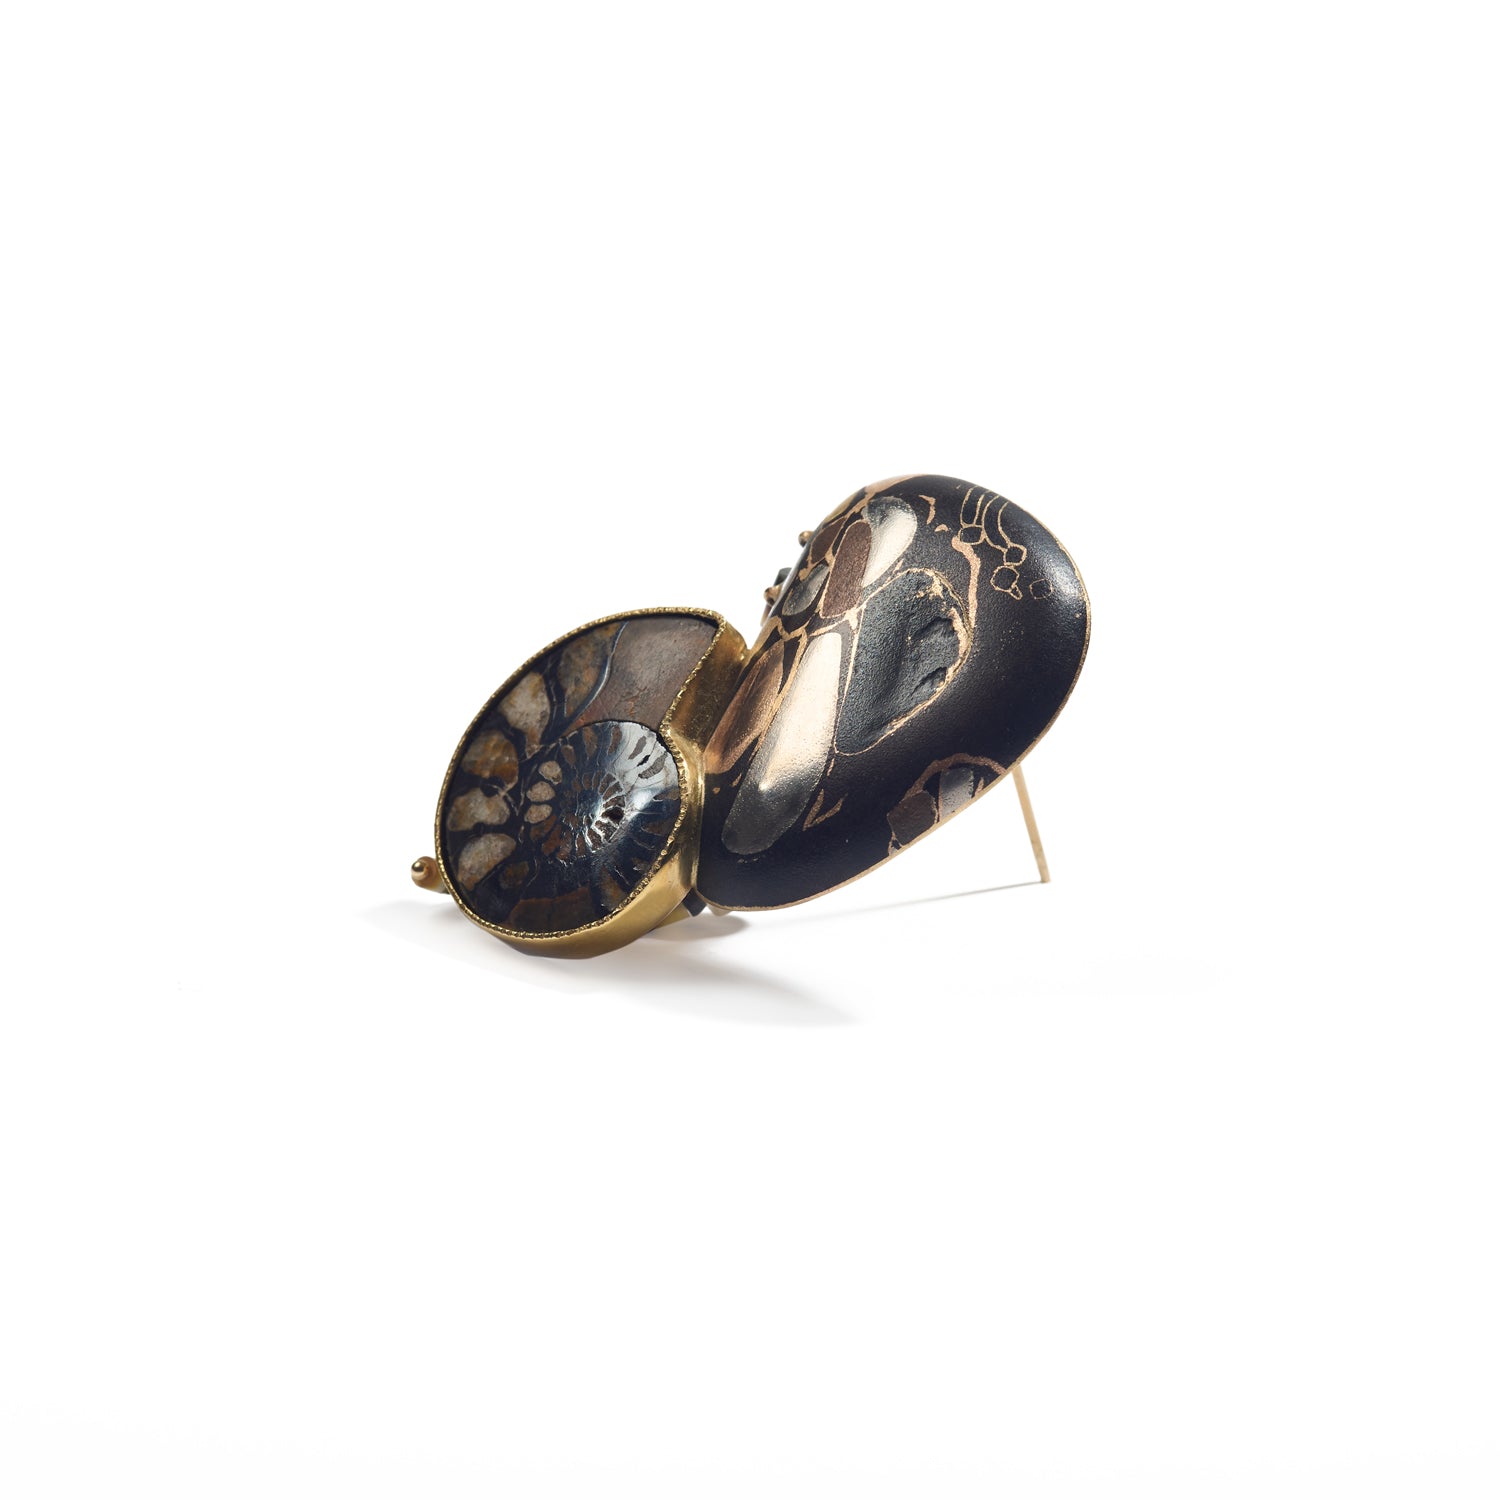 Ammonite Inspired Inlaid Brooch